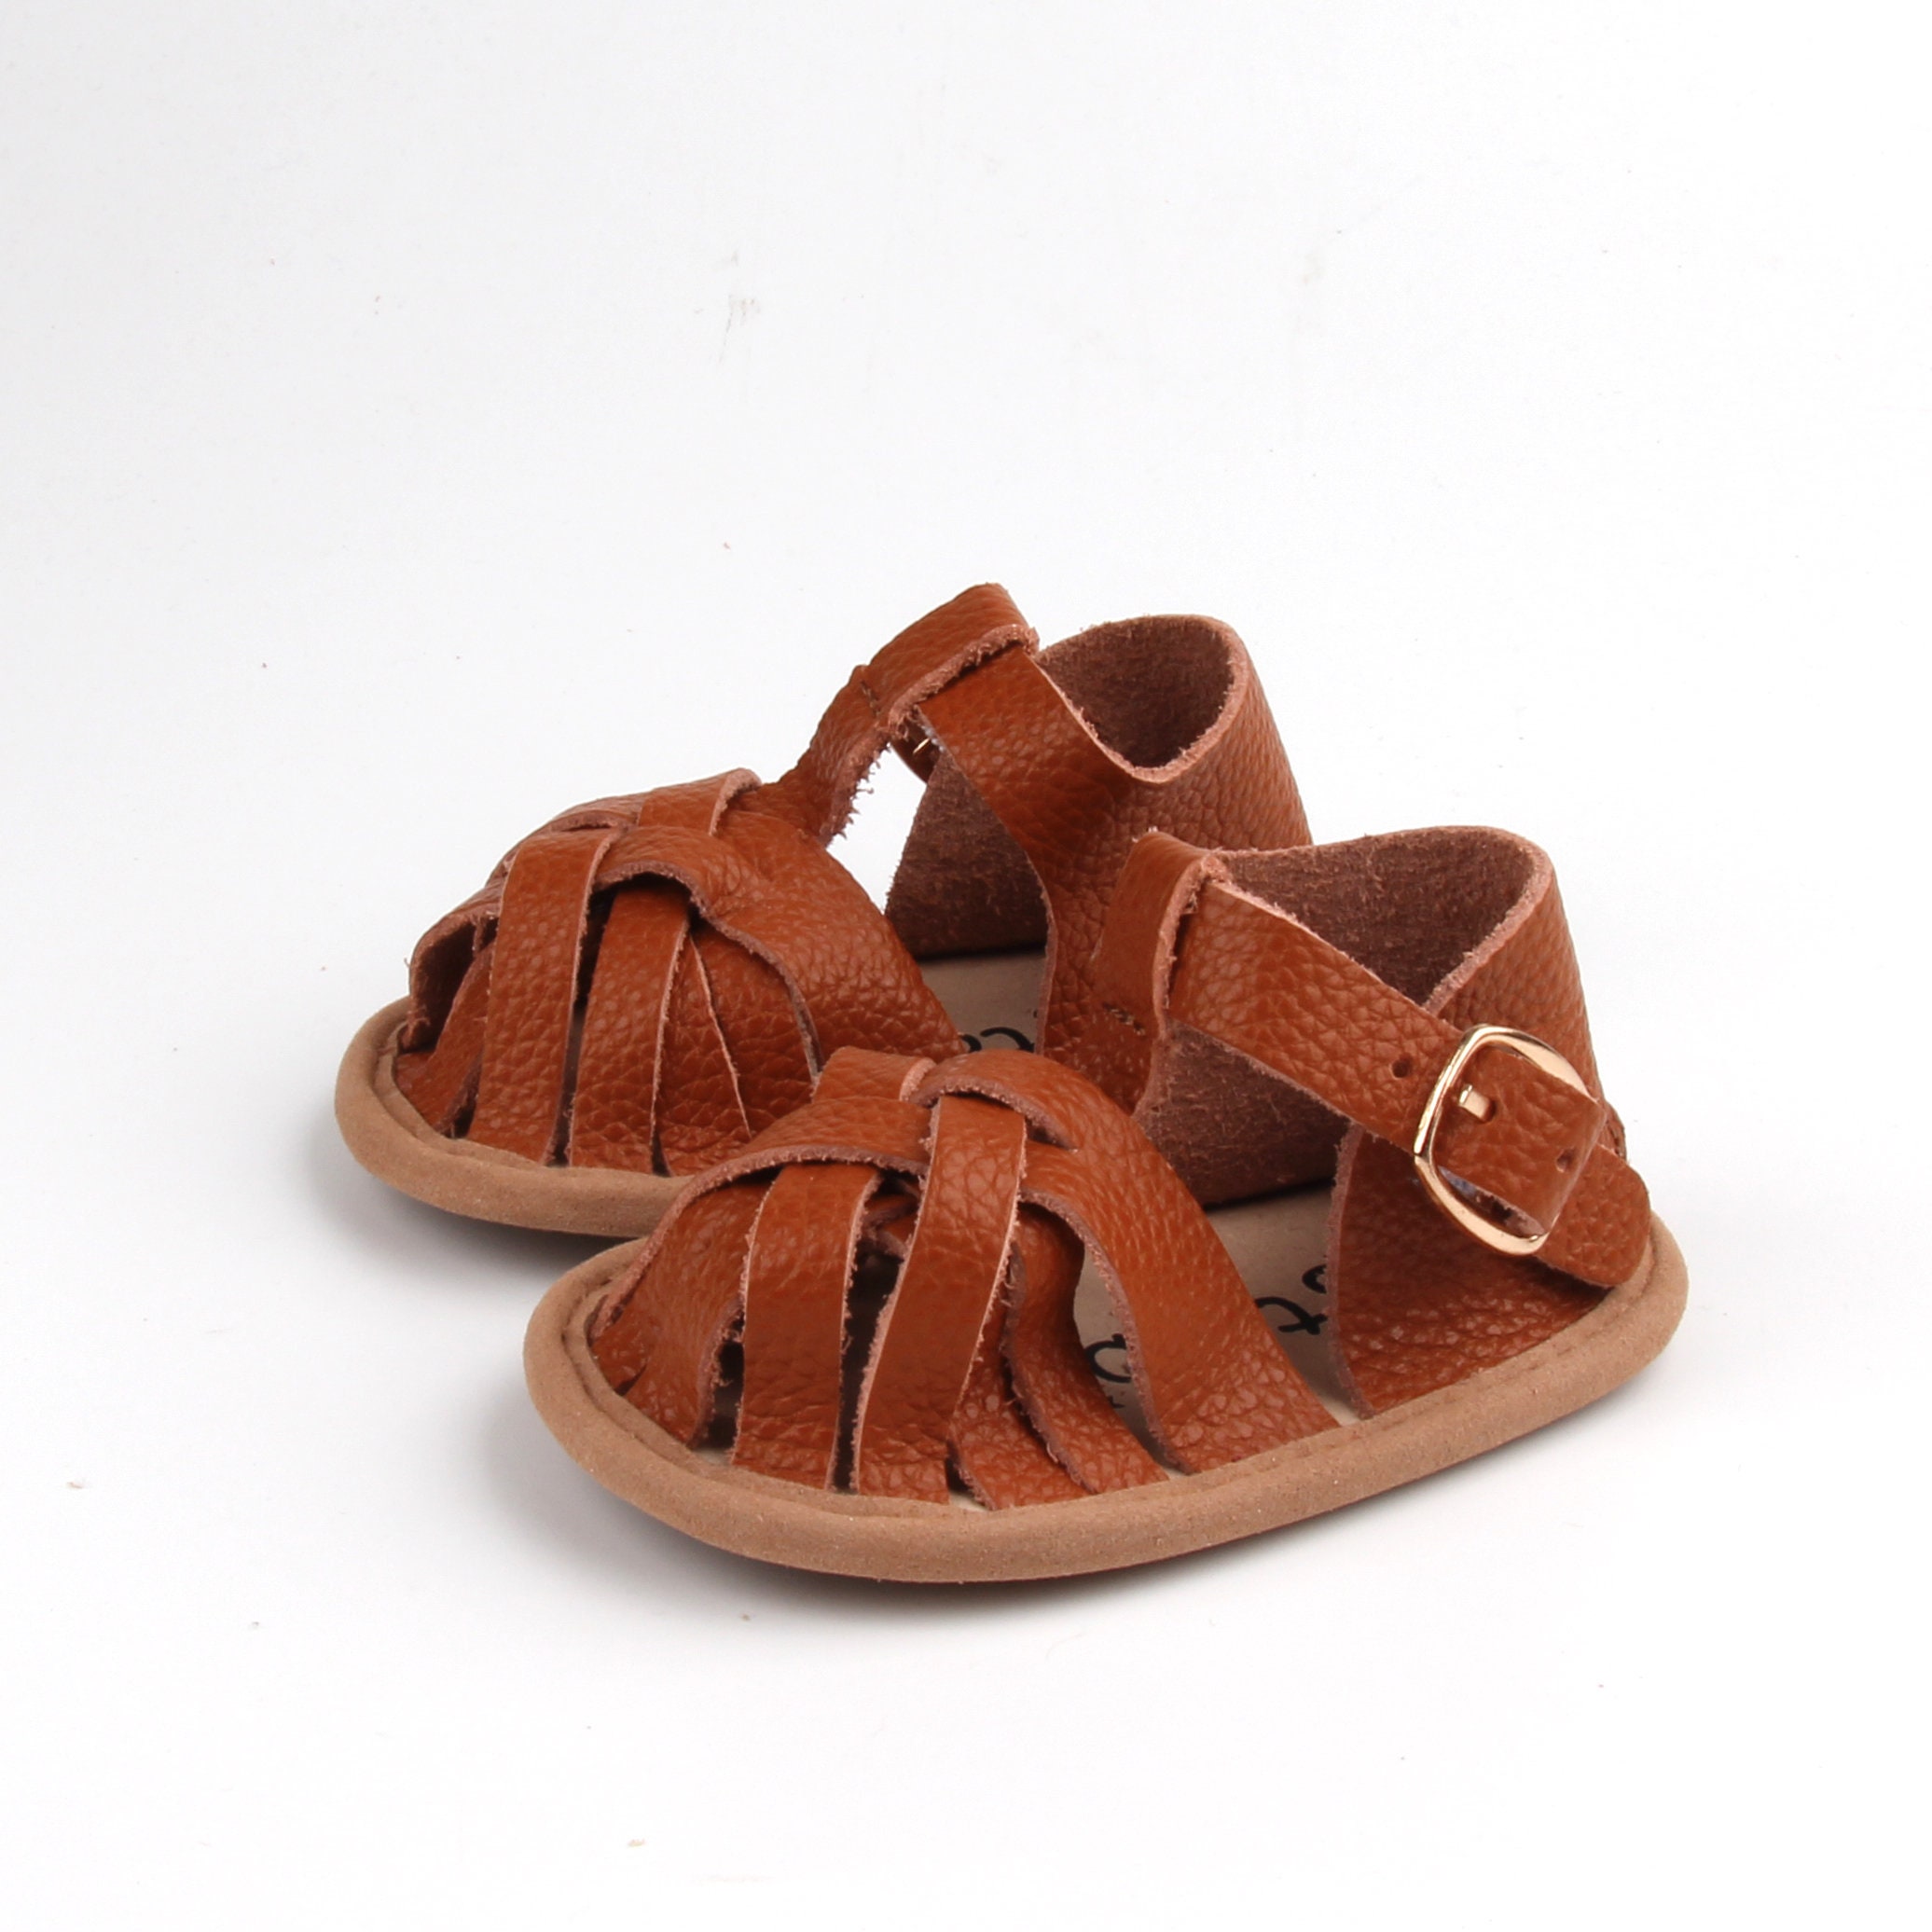 Handmade leather boy's sandals | The leather craftsmen-tmf.edu.vn